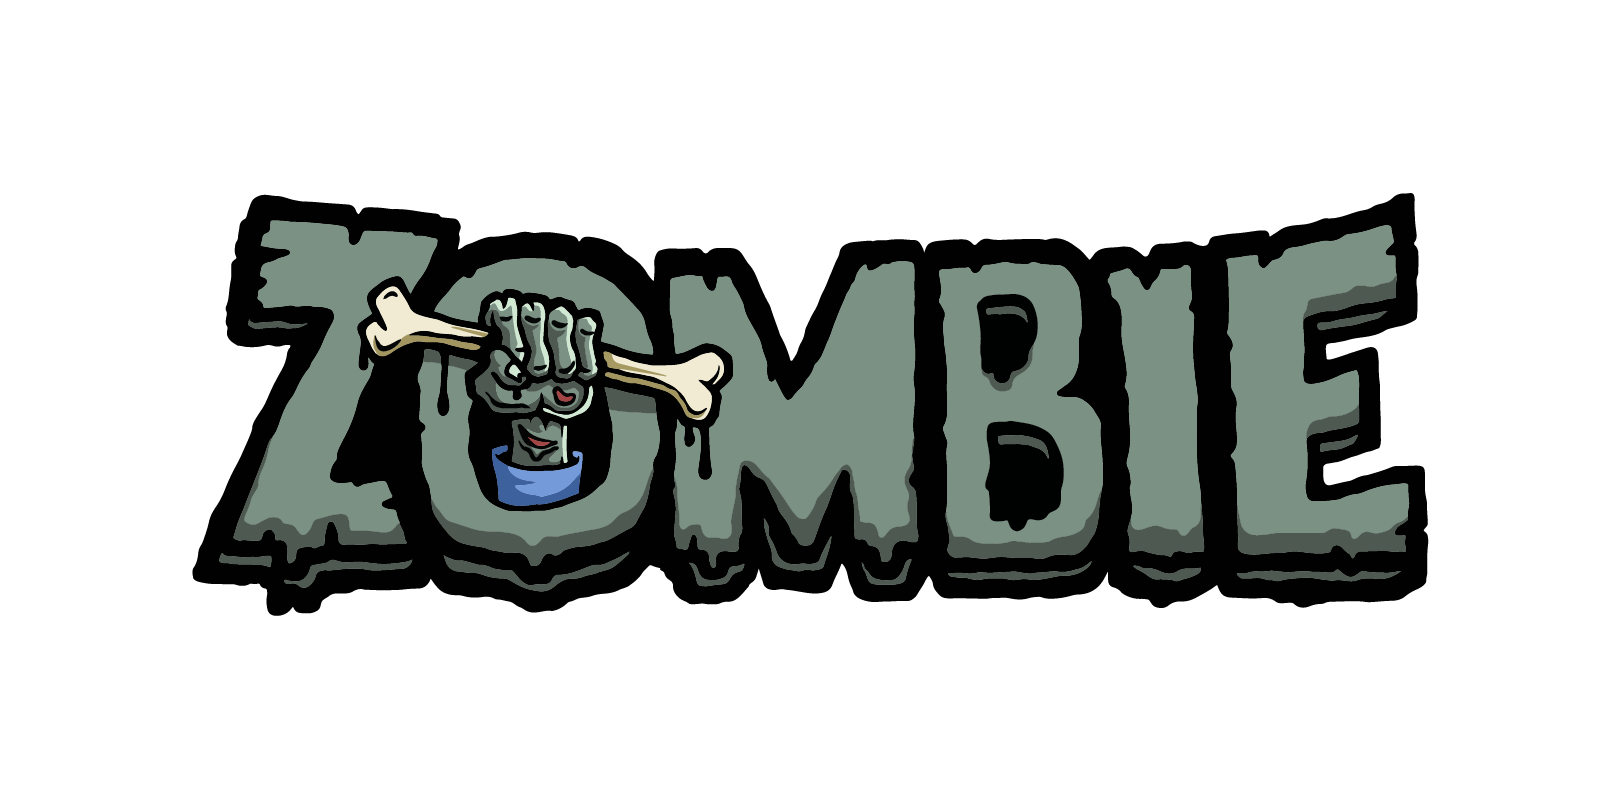 100,000 Zombie logo Vector Images | Depositphotos